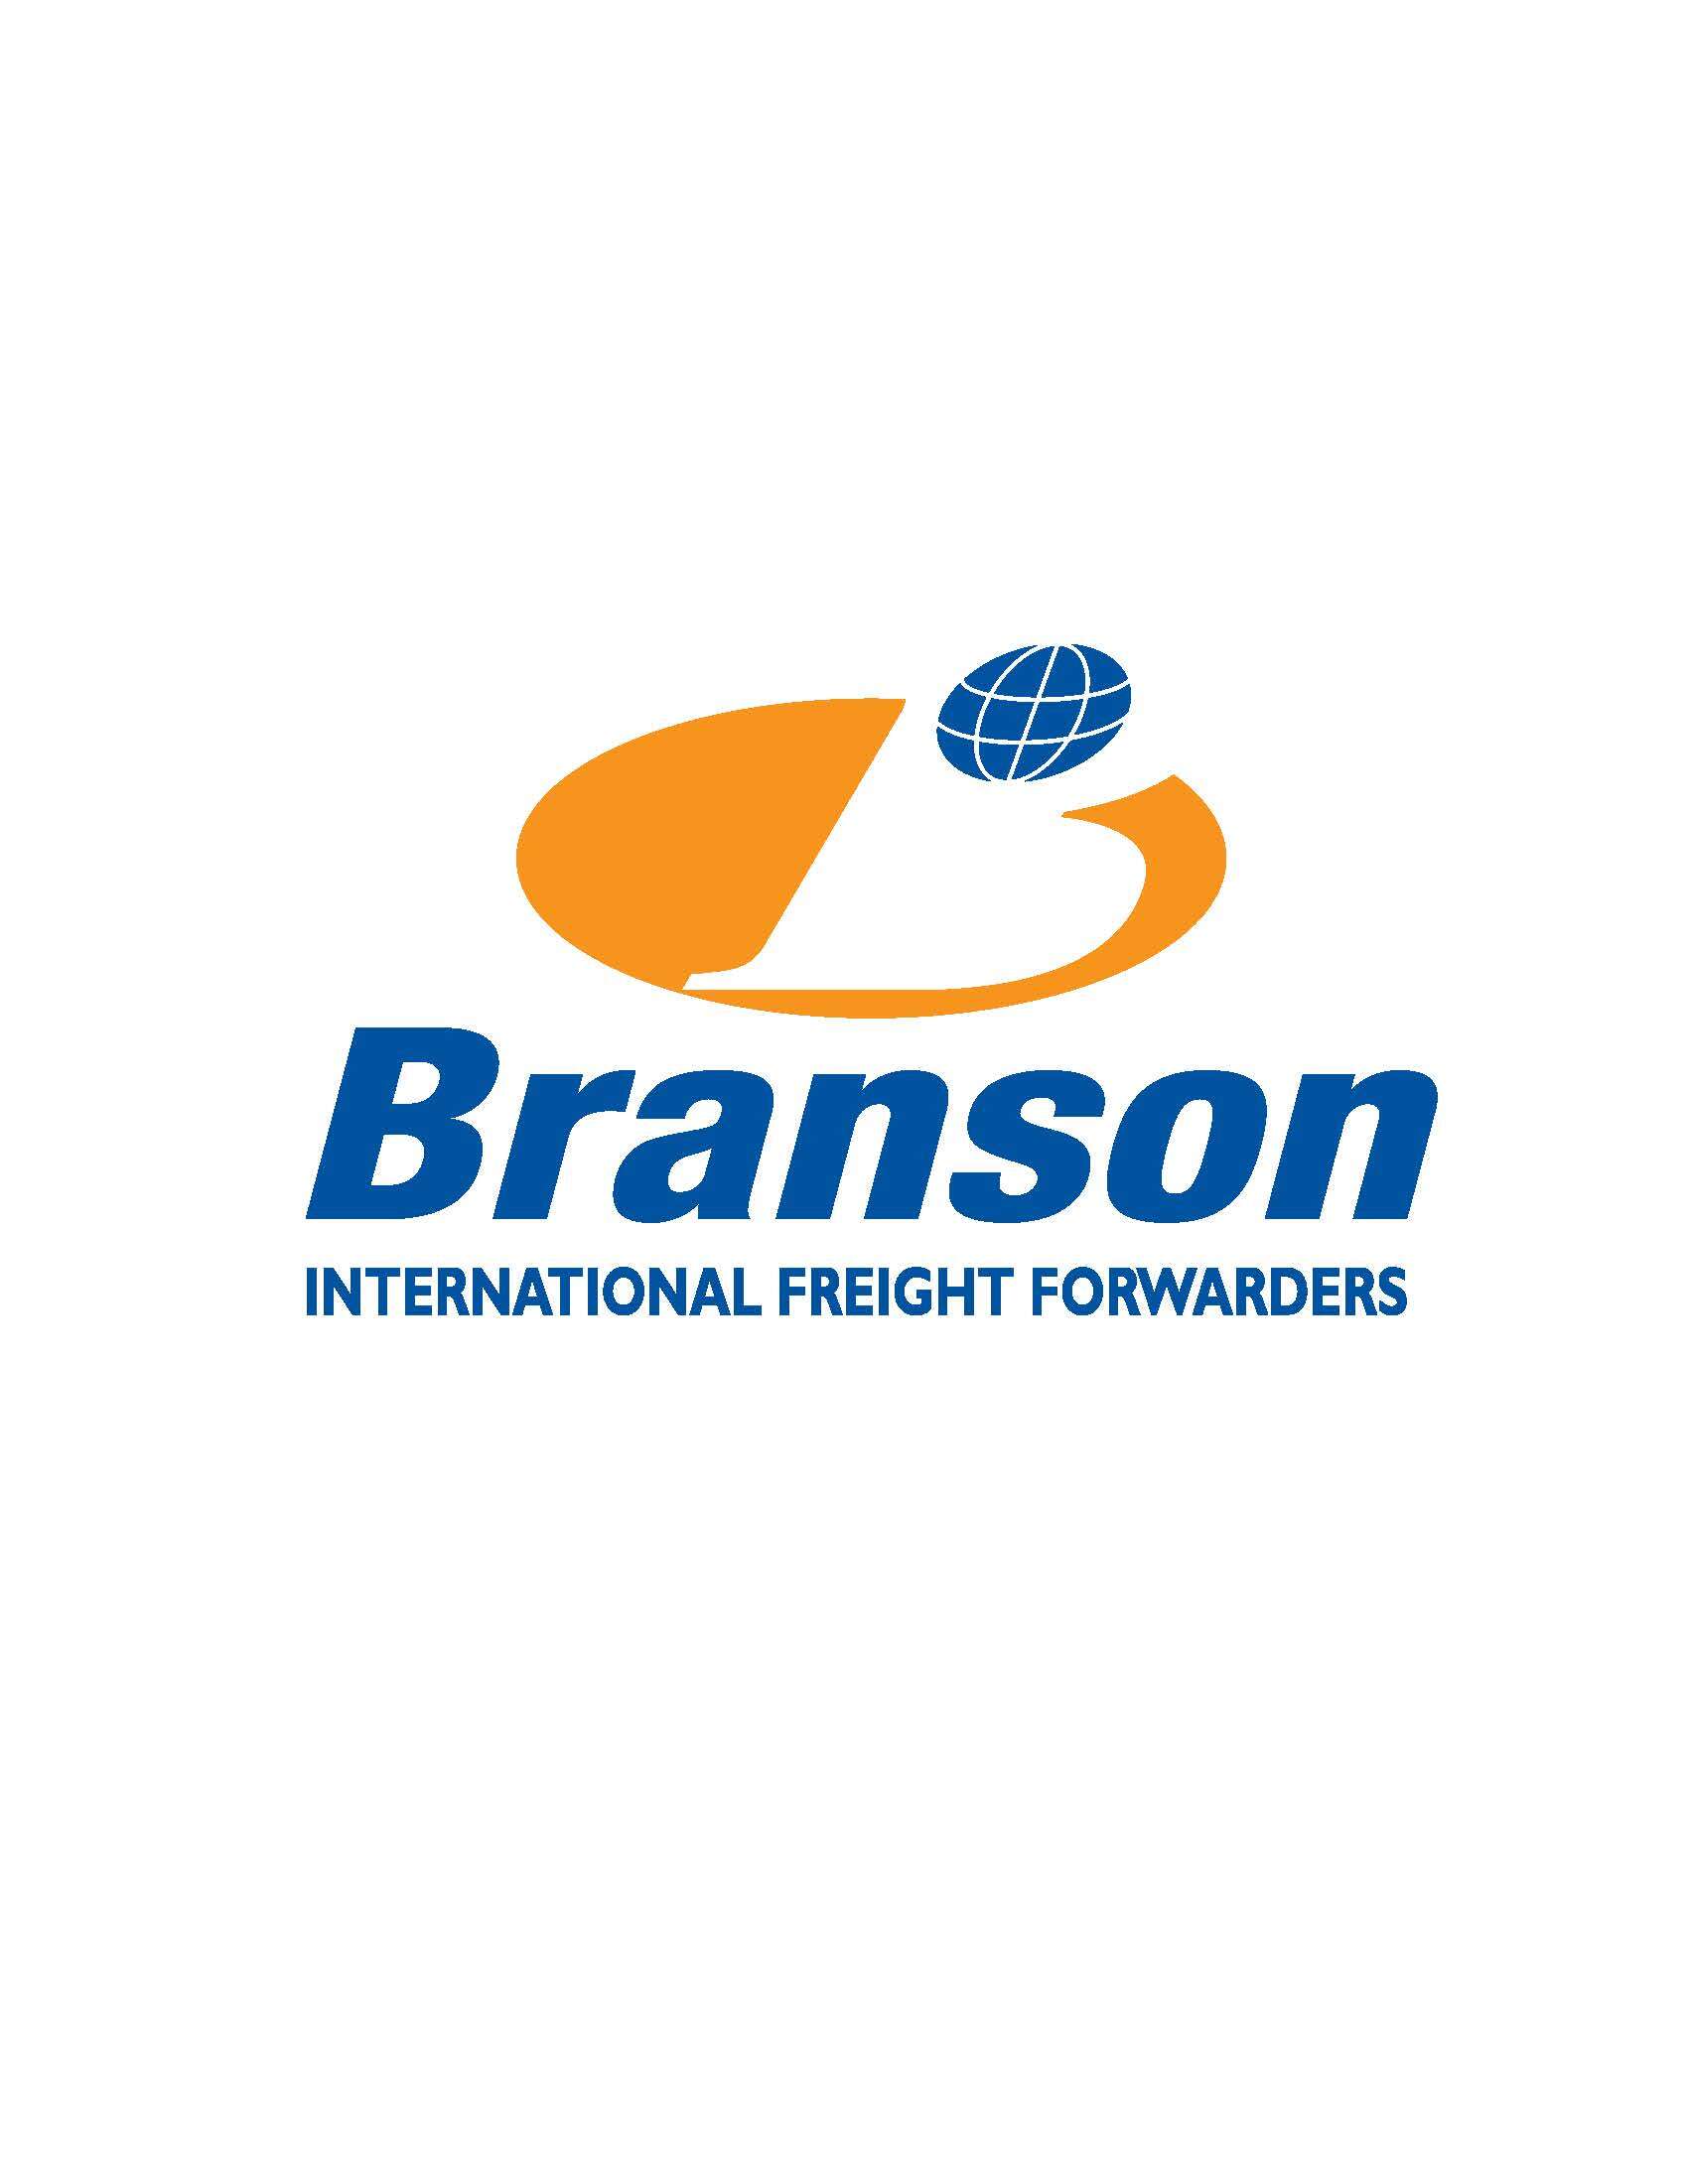 Branson International